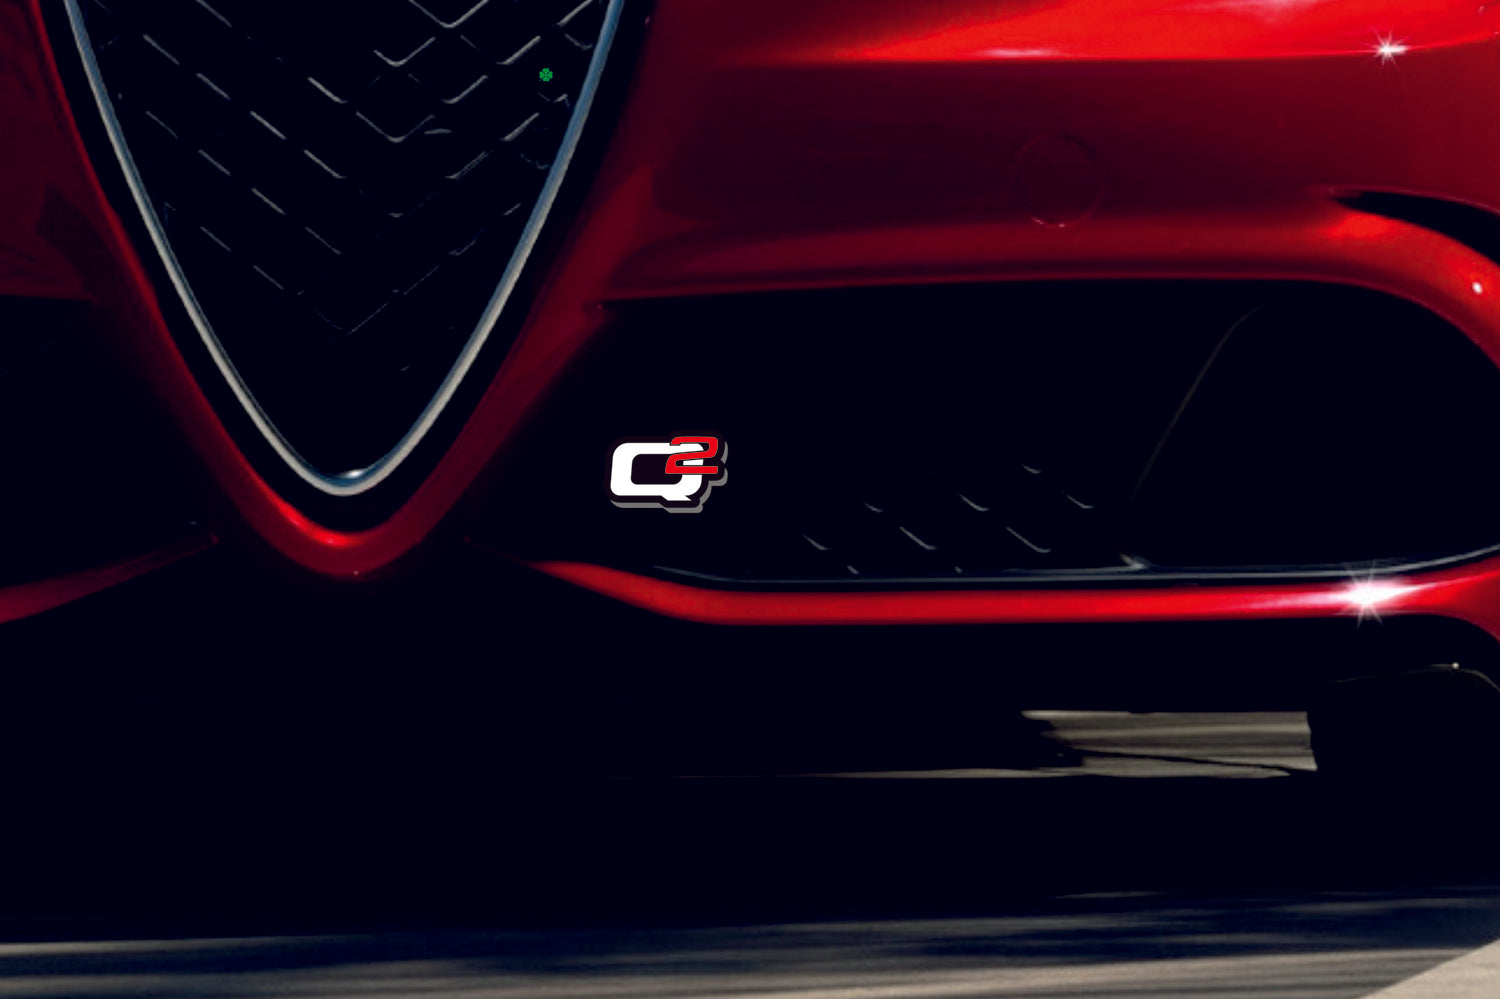 Alfa Romeo Radiator grille emblem with Q2 logo - decoinfabric